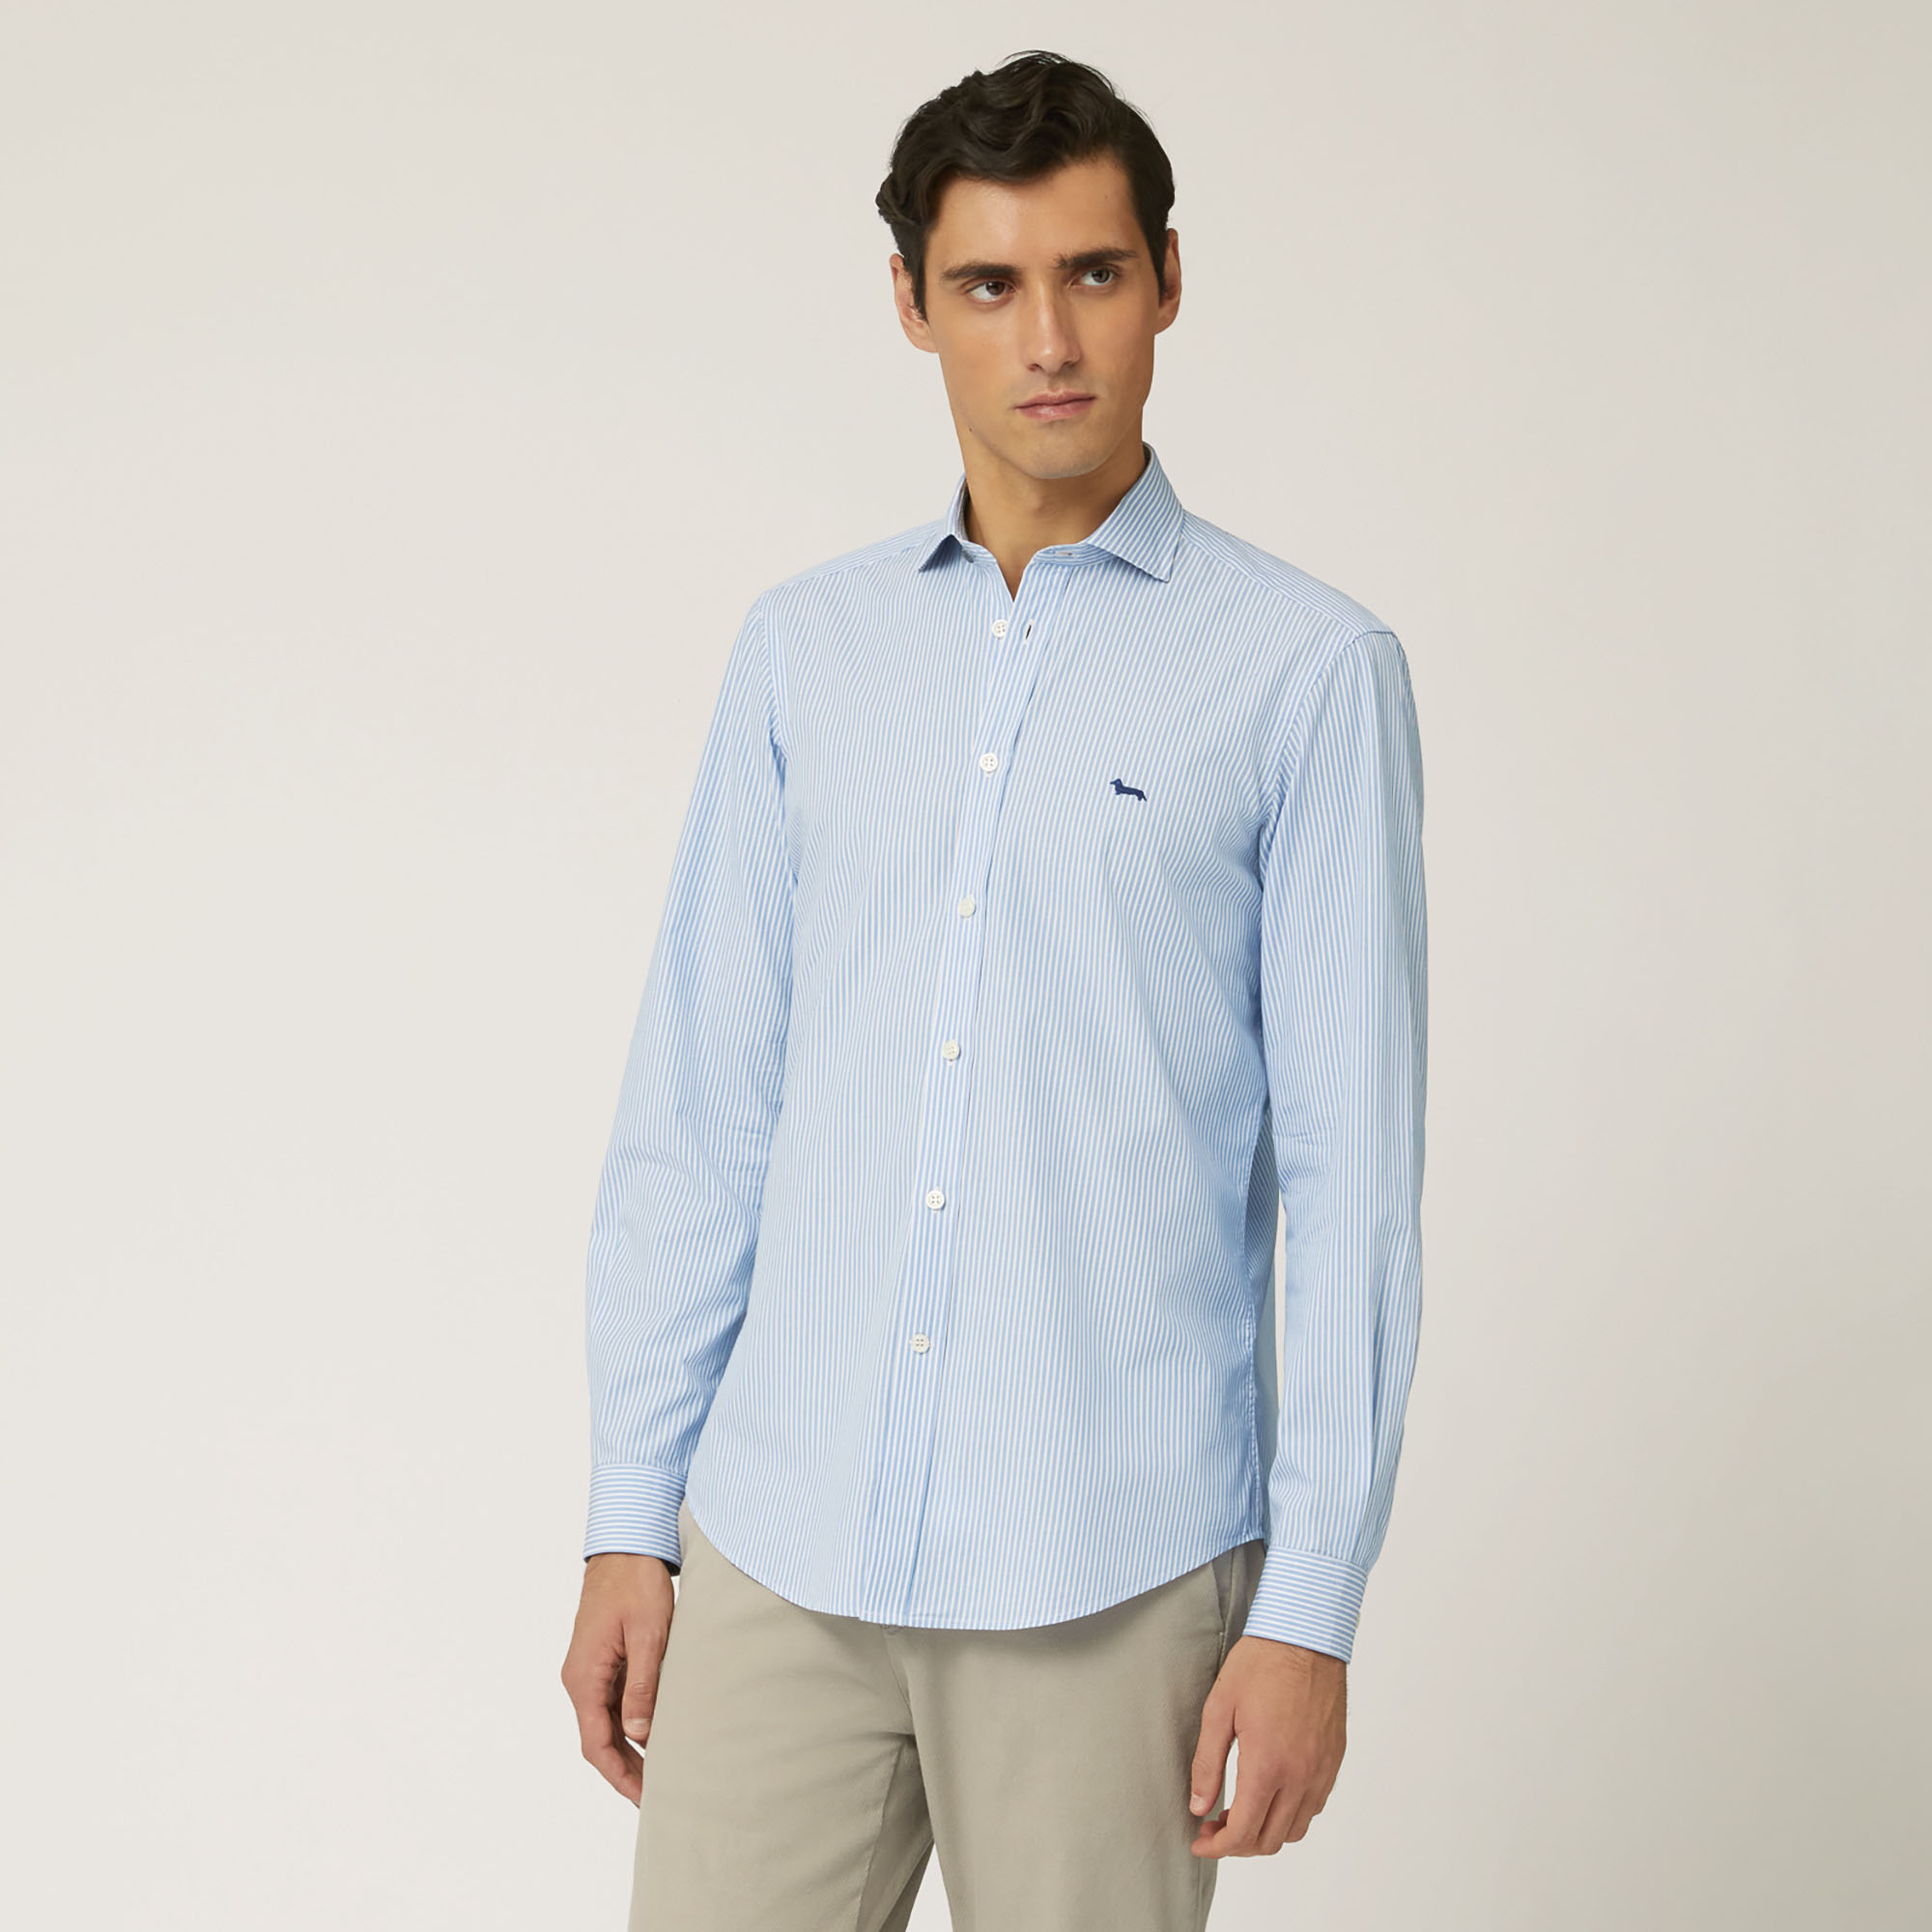 Organic Cotton Shirt With Micro Stripes, Light Blue, large